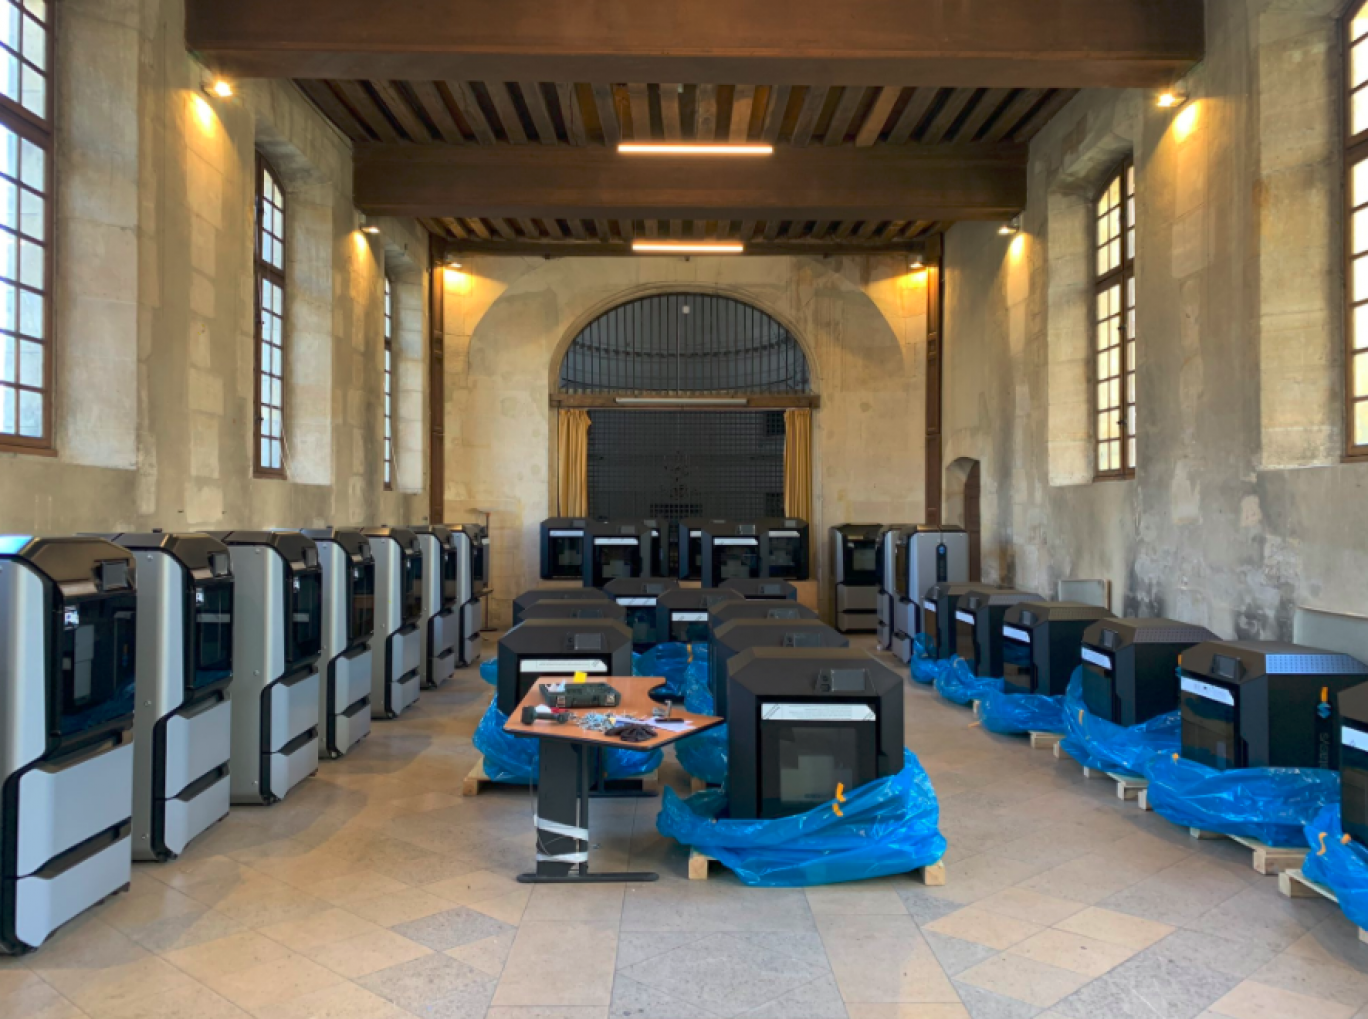 L'abbaye de Port Royal (hôpital Cochin, Paris) transformée en usine d'impression 3D. © Bone3D